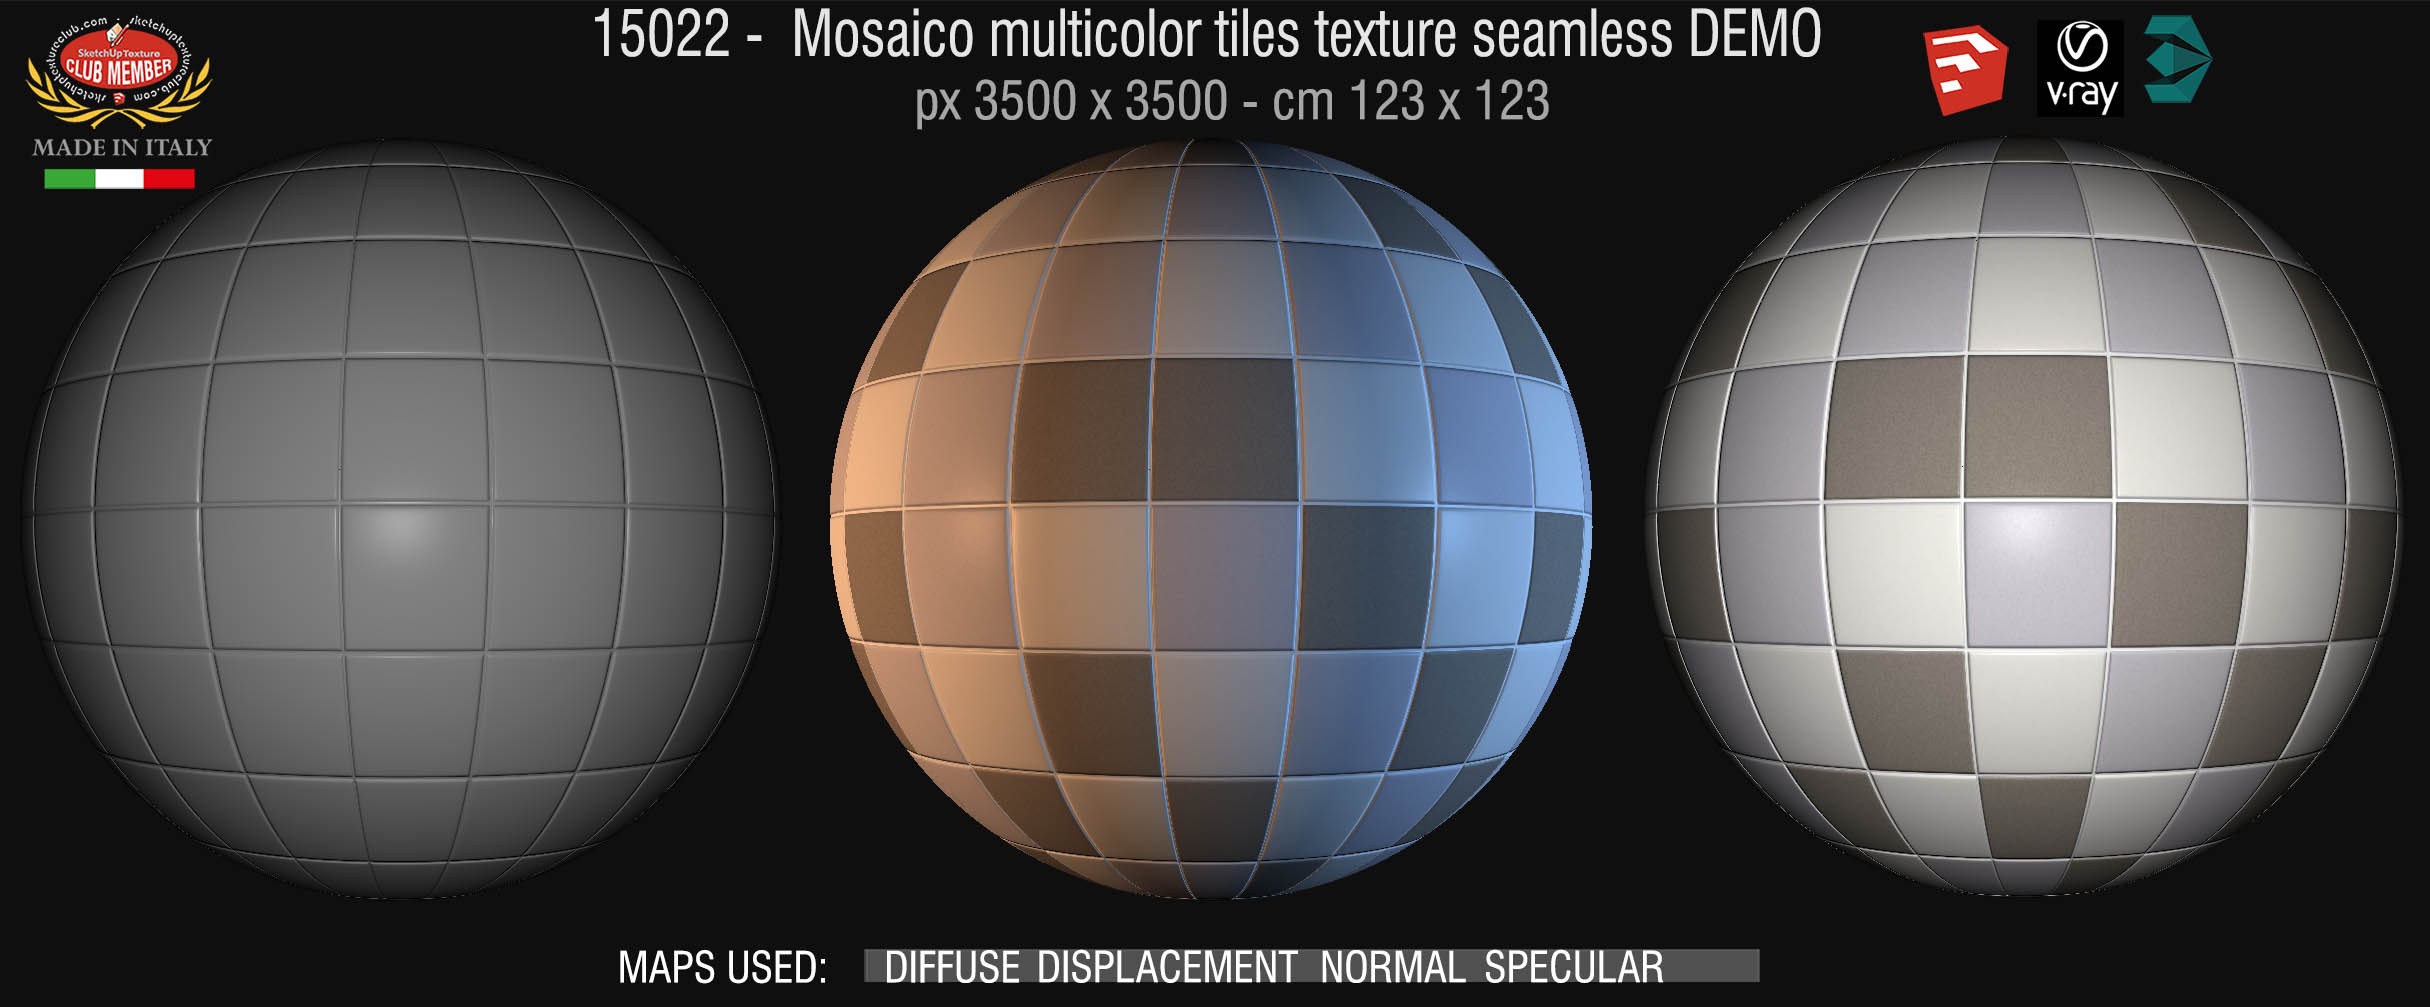 15022 Mosaico multicolor tiles texture seamless + maps DEMO